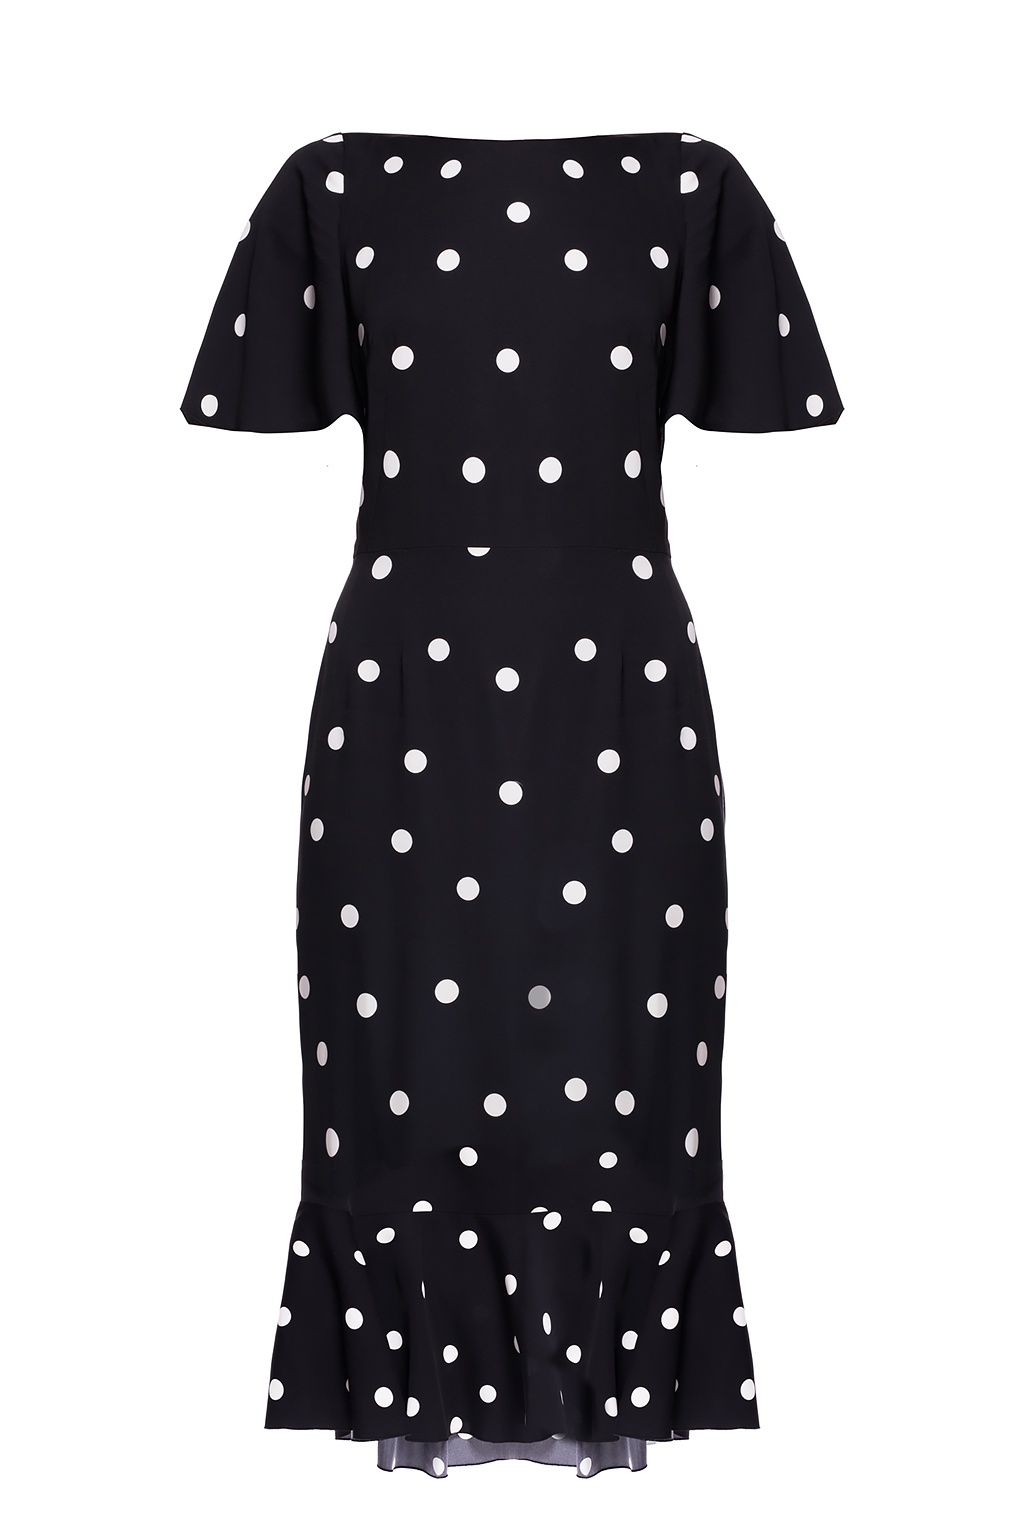 Black Polka dot dress Dolce & Gabbana - Vitkac France